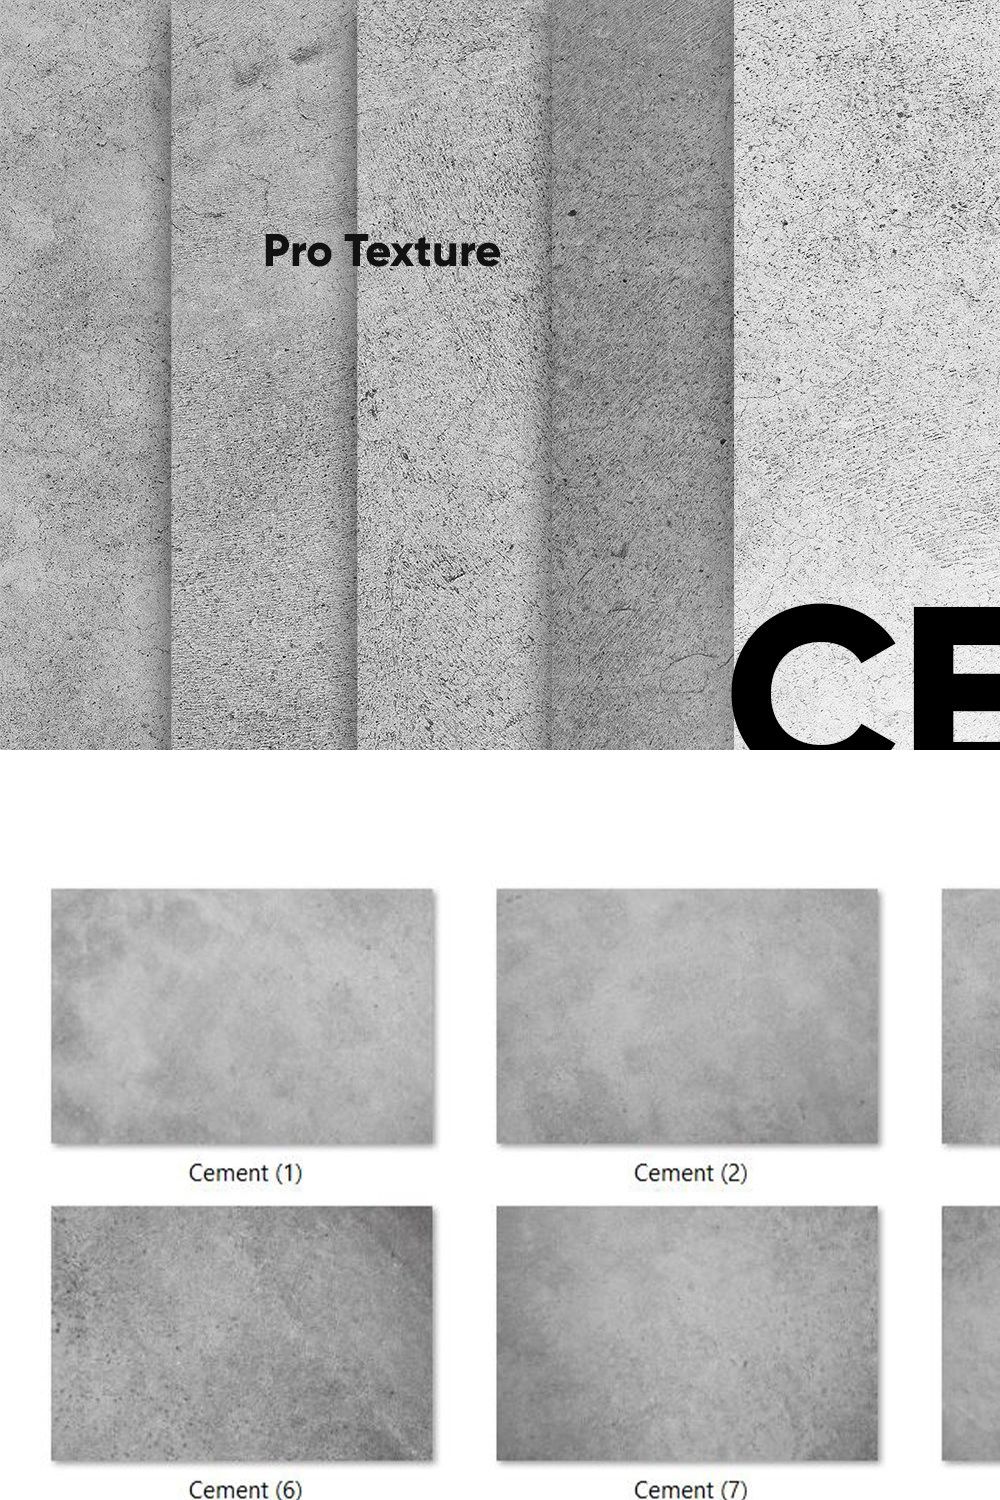 20 Cement Texture HQ pinterest preview image.